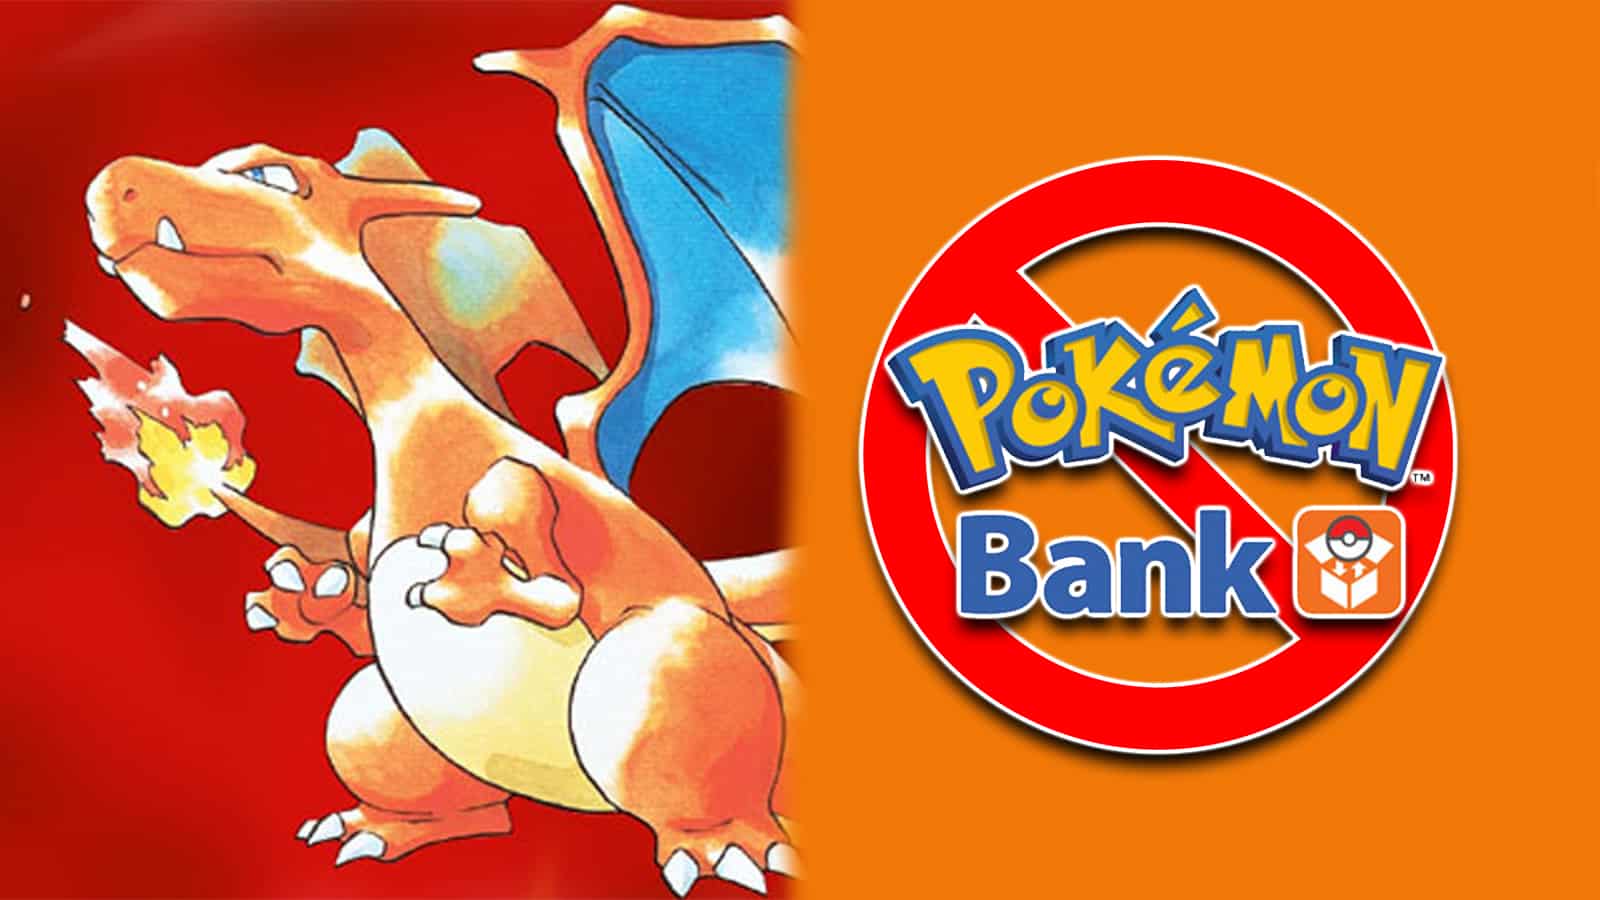 Pokemon Red Charizard art next to Pokemon Home logo screenshot.